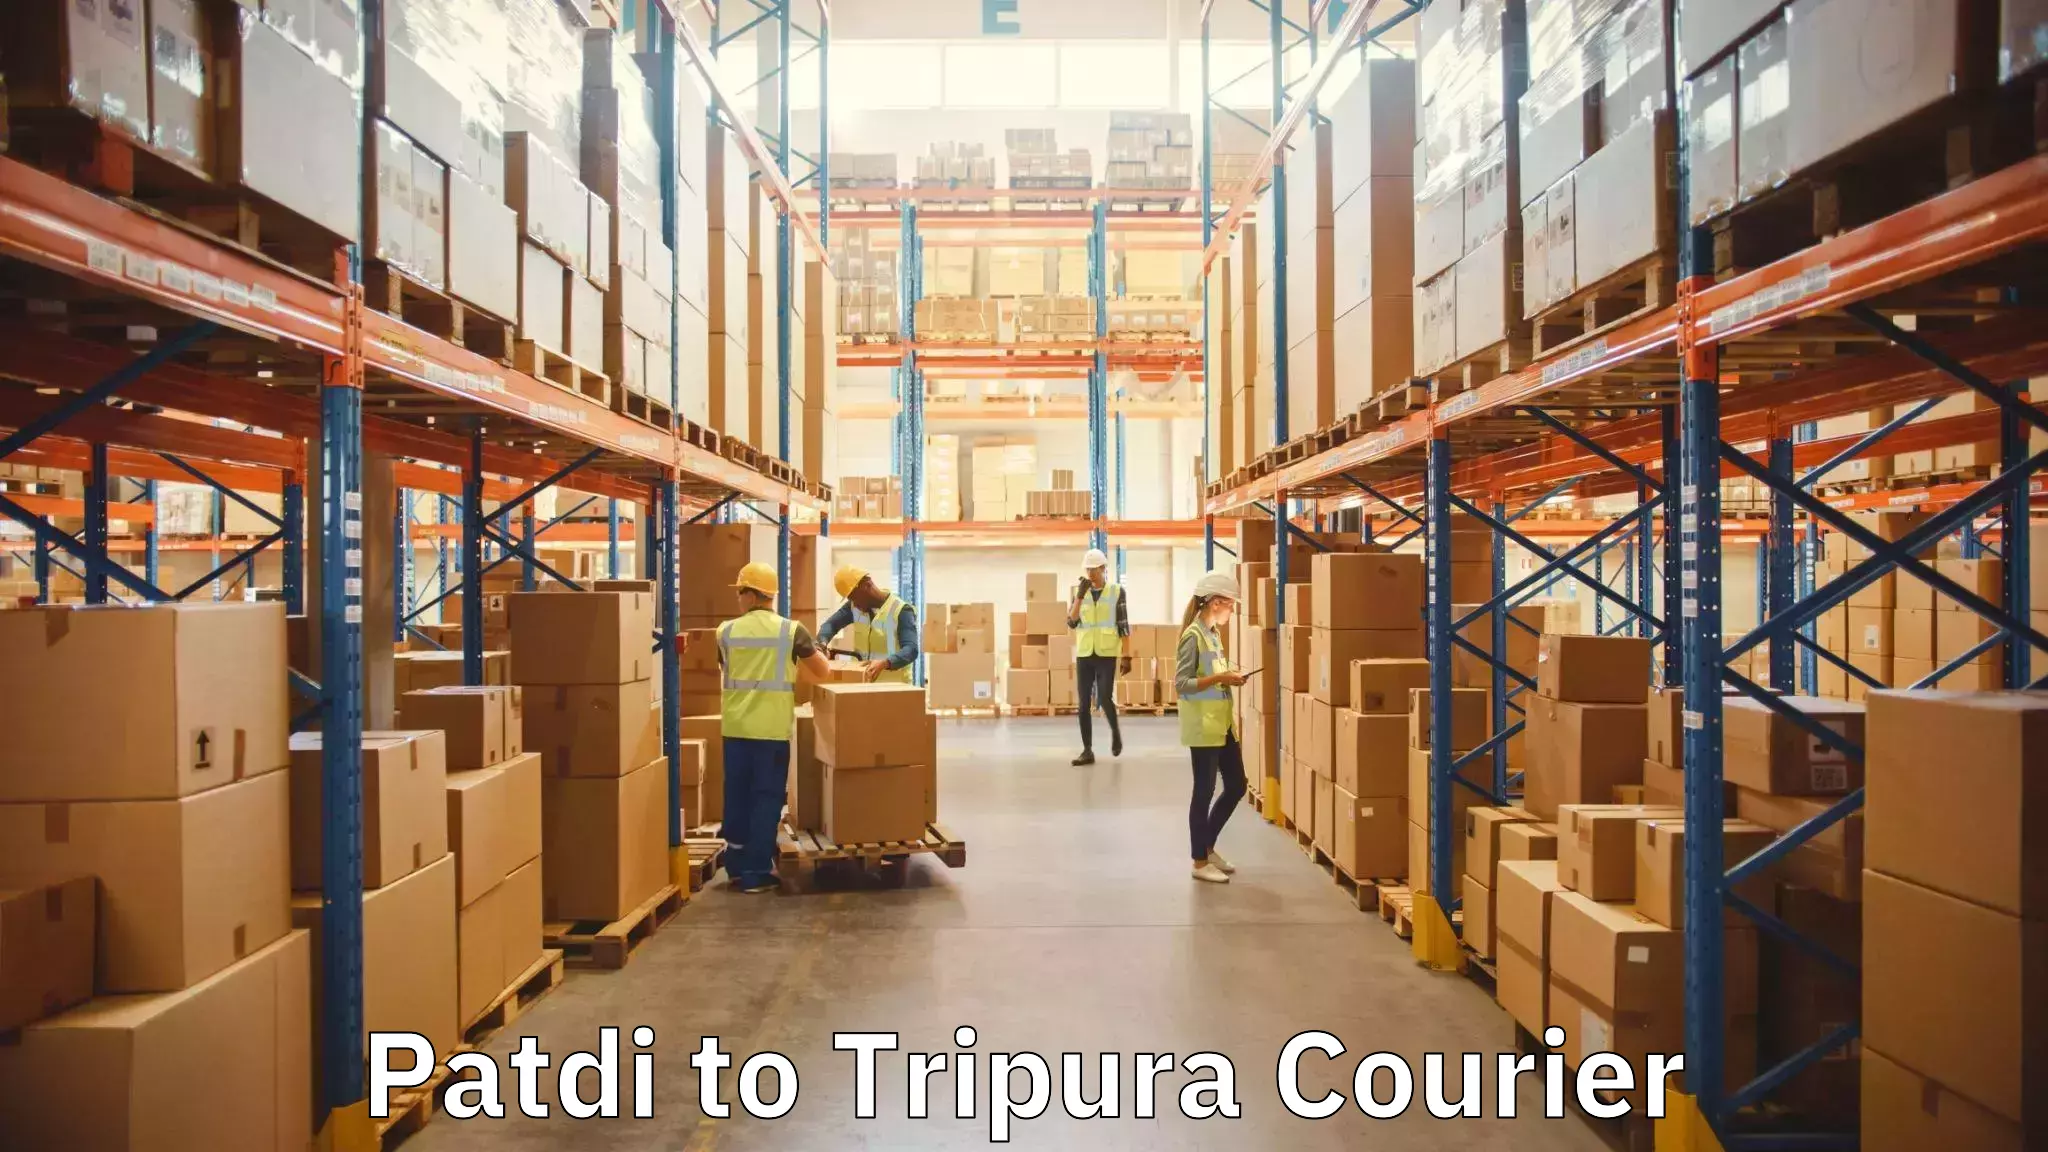 Specialized moving company Patdi to Udaipur Tripura